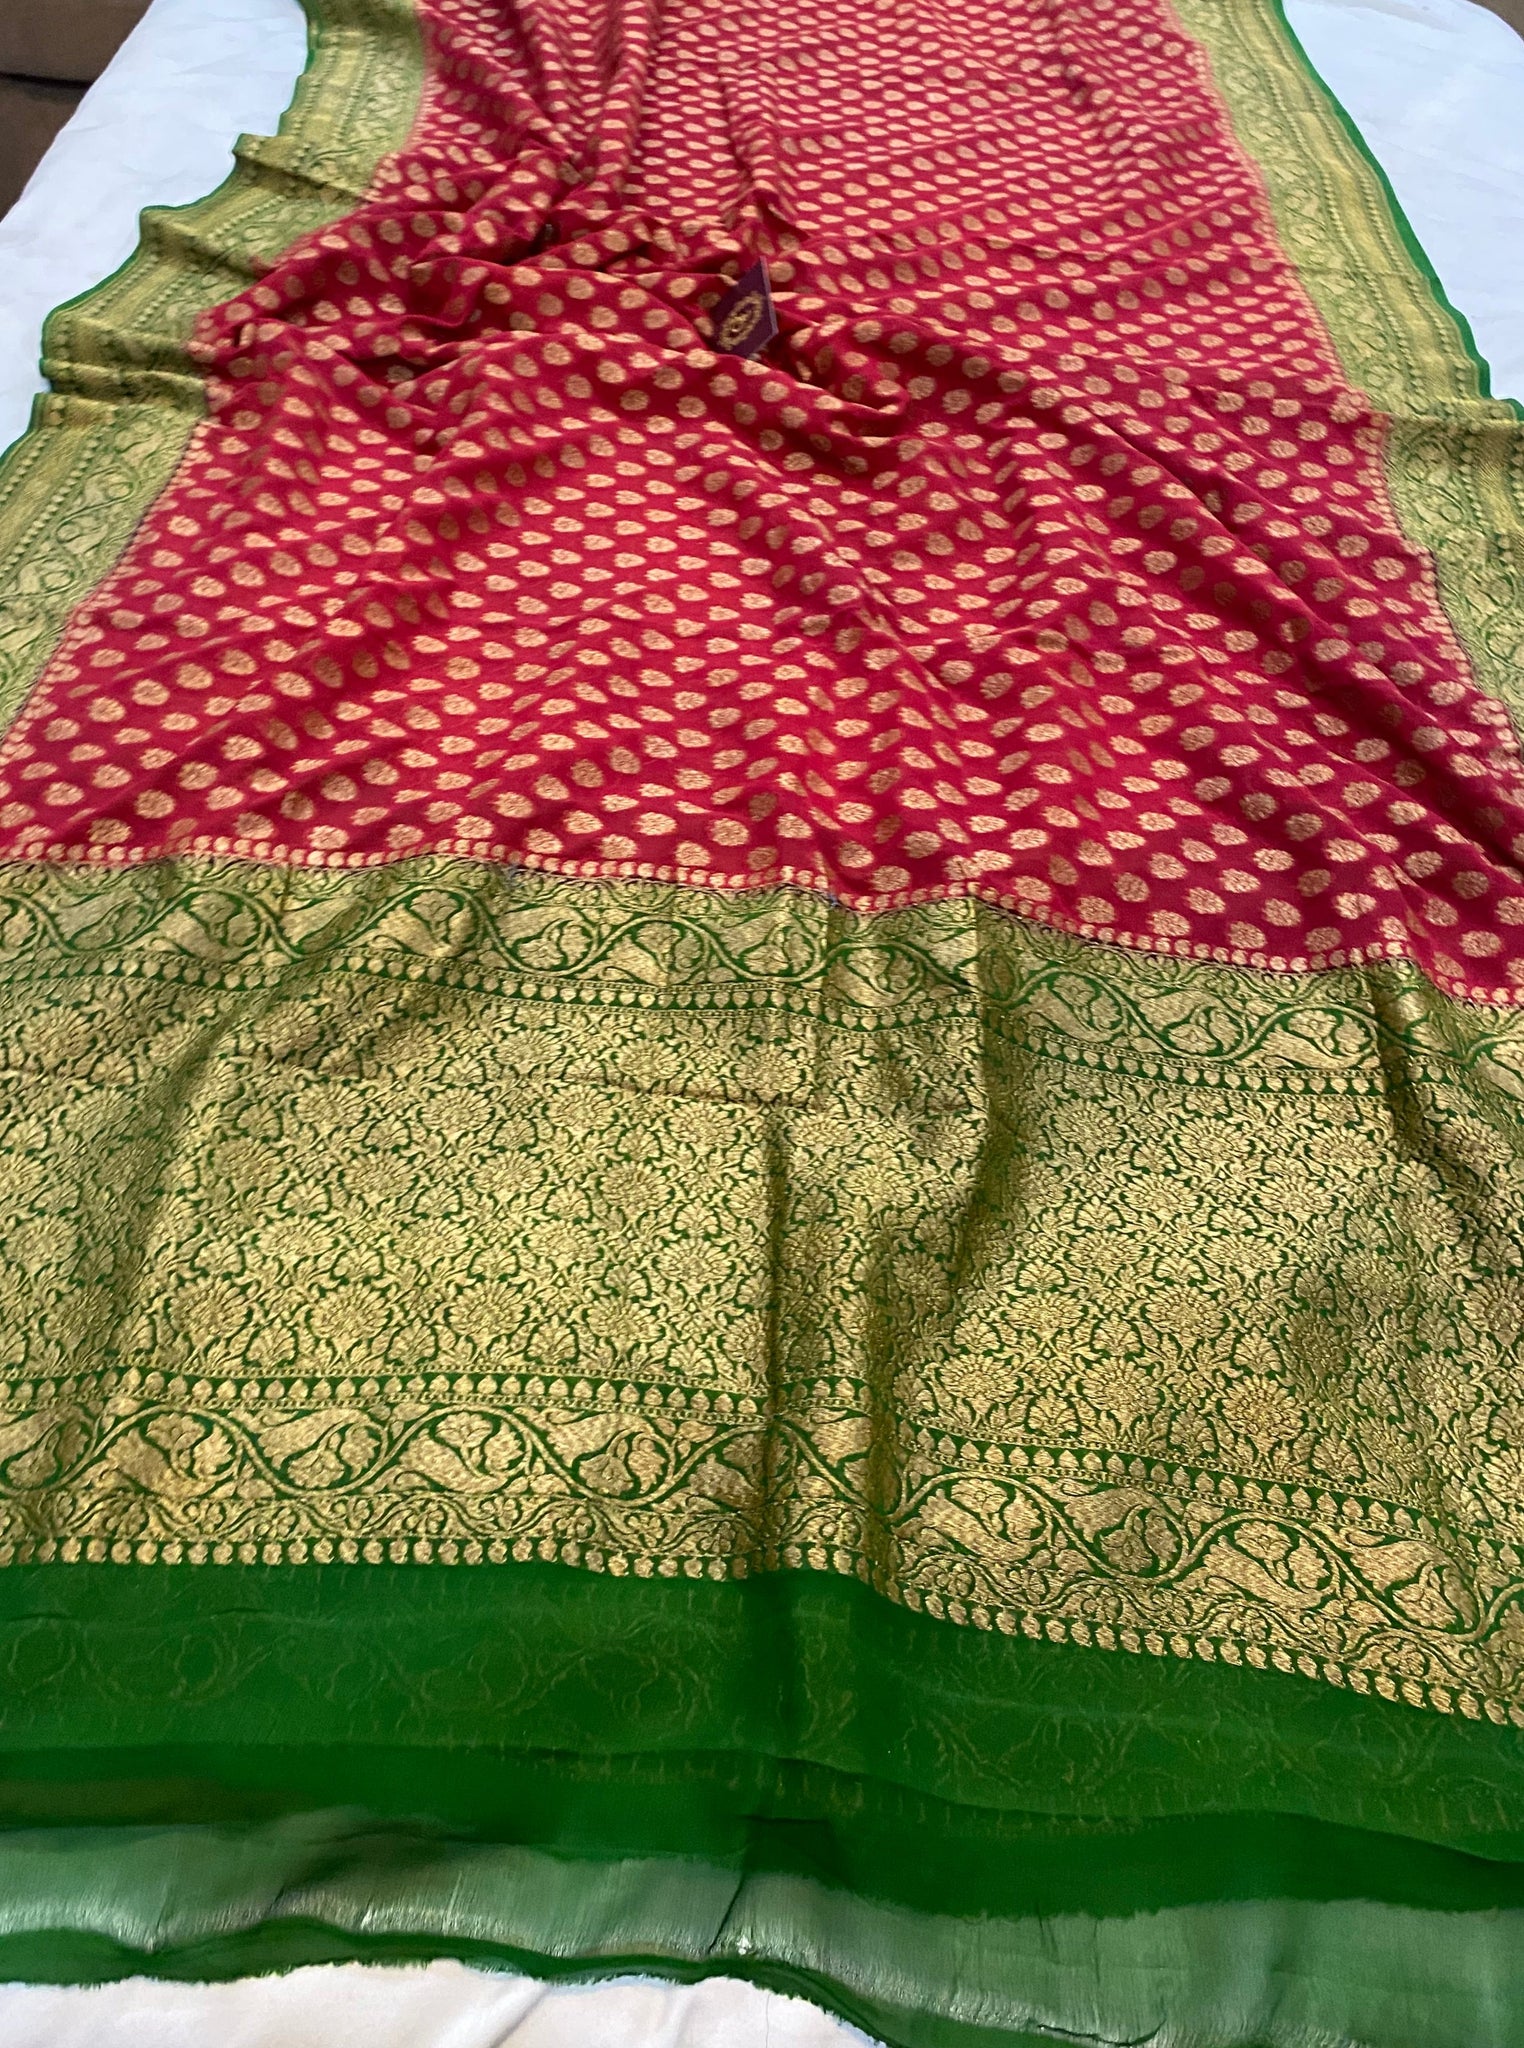 Maroon silk saree with blouse 114I